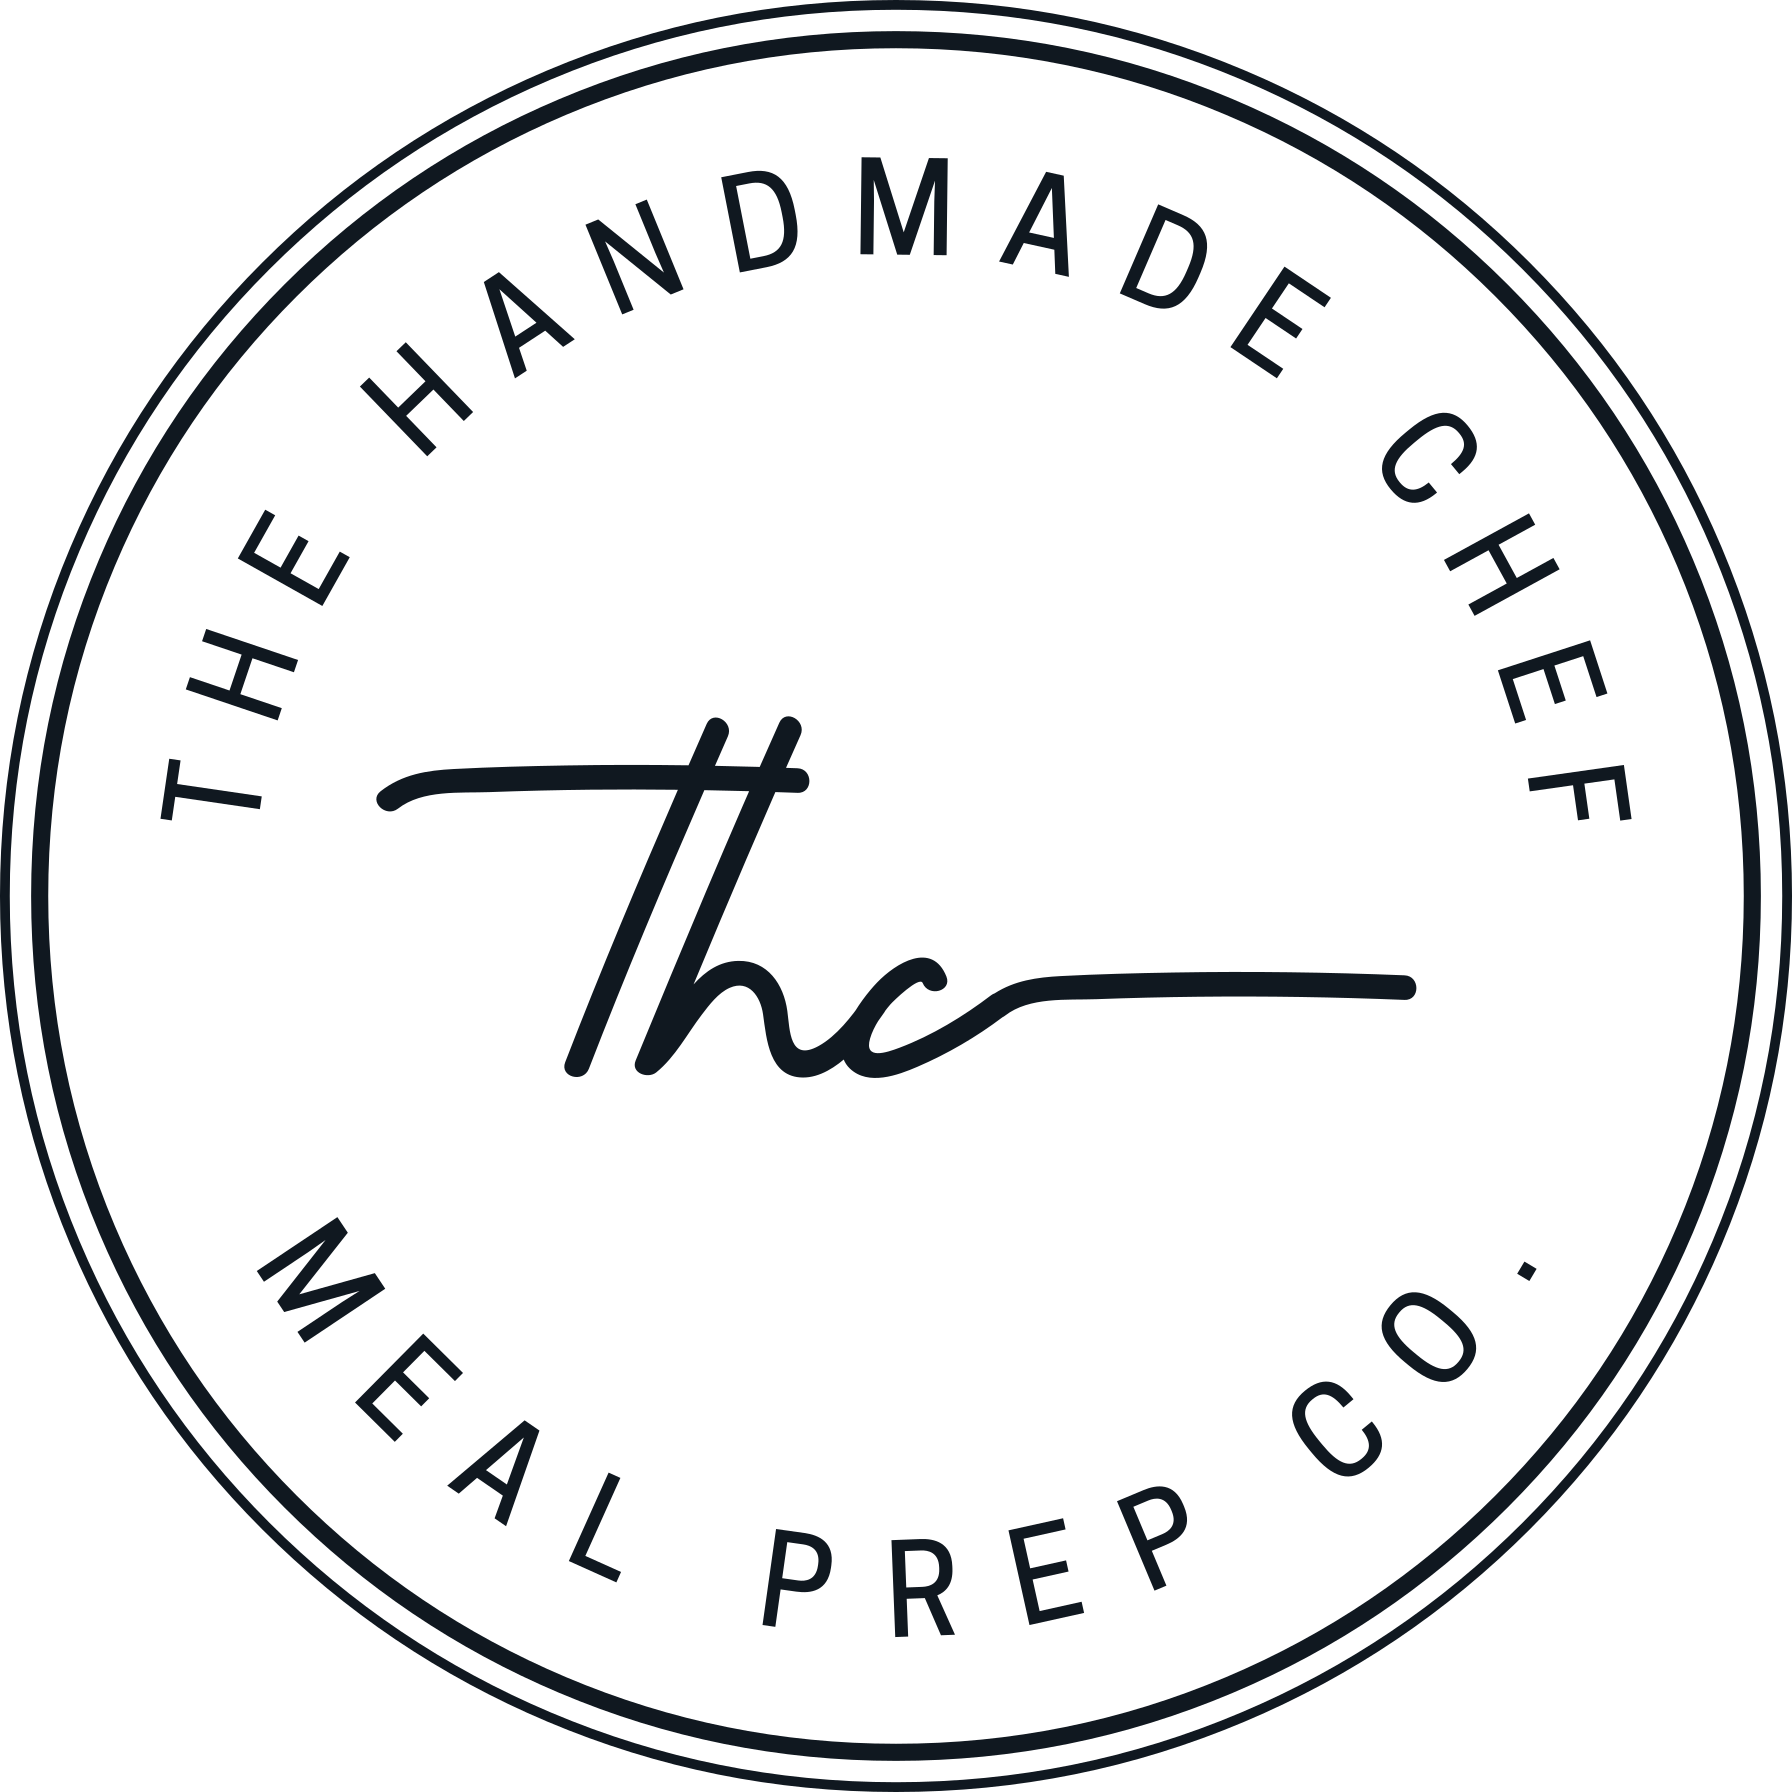 The Handmade Chef Meal Prep Co. logo